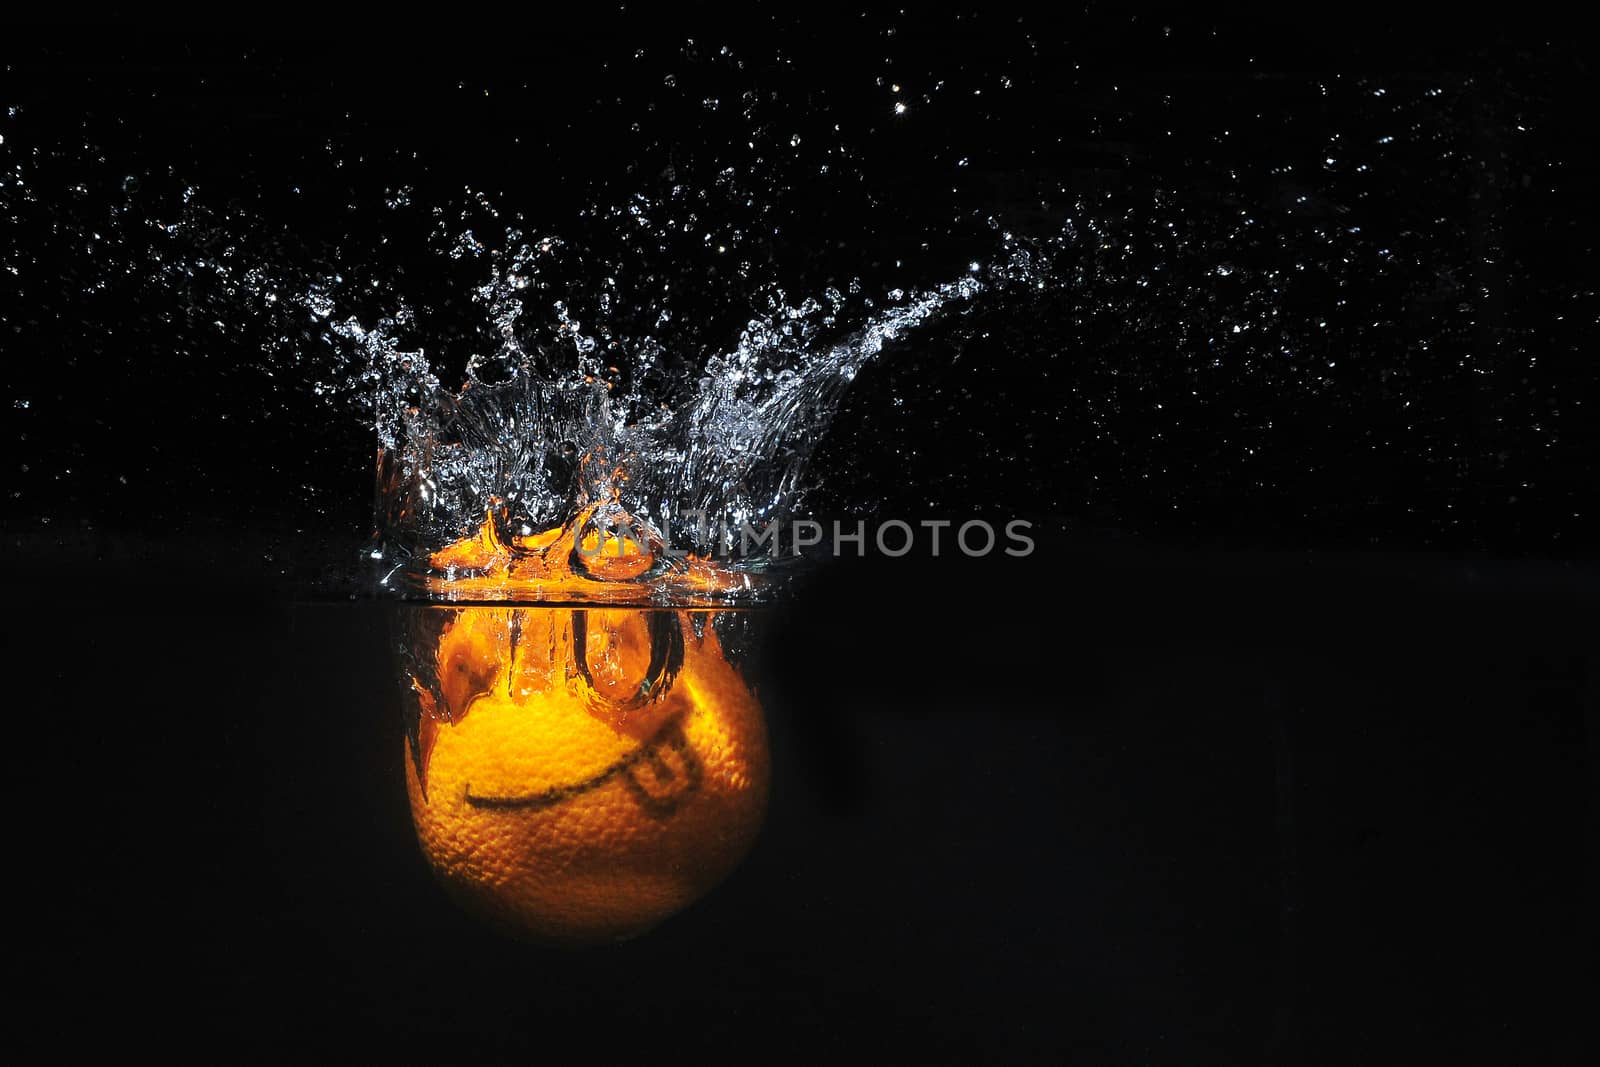 Smile orange with splashes of water on a black background by Surasak